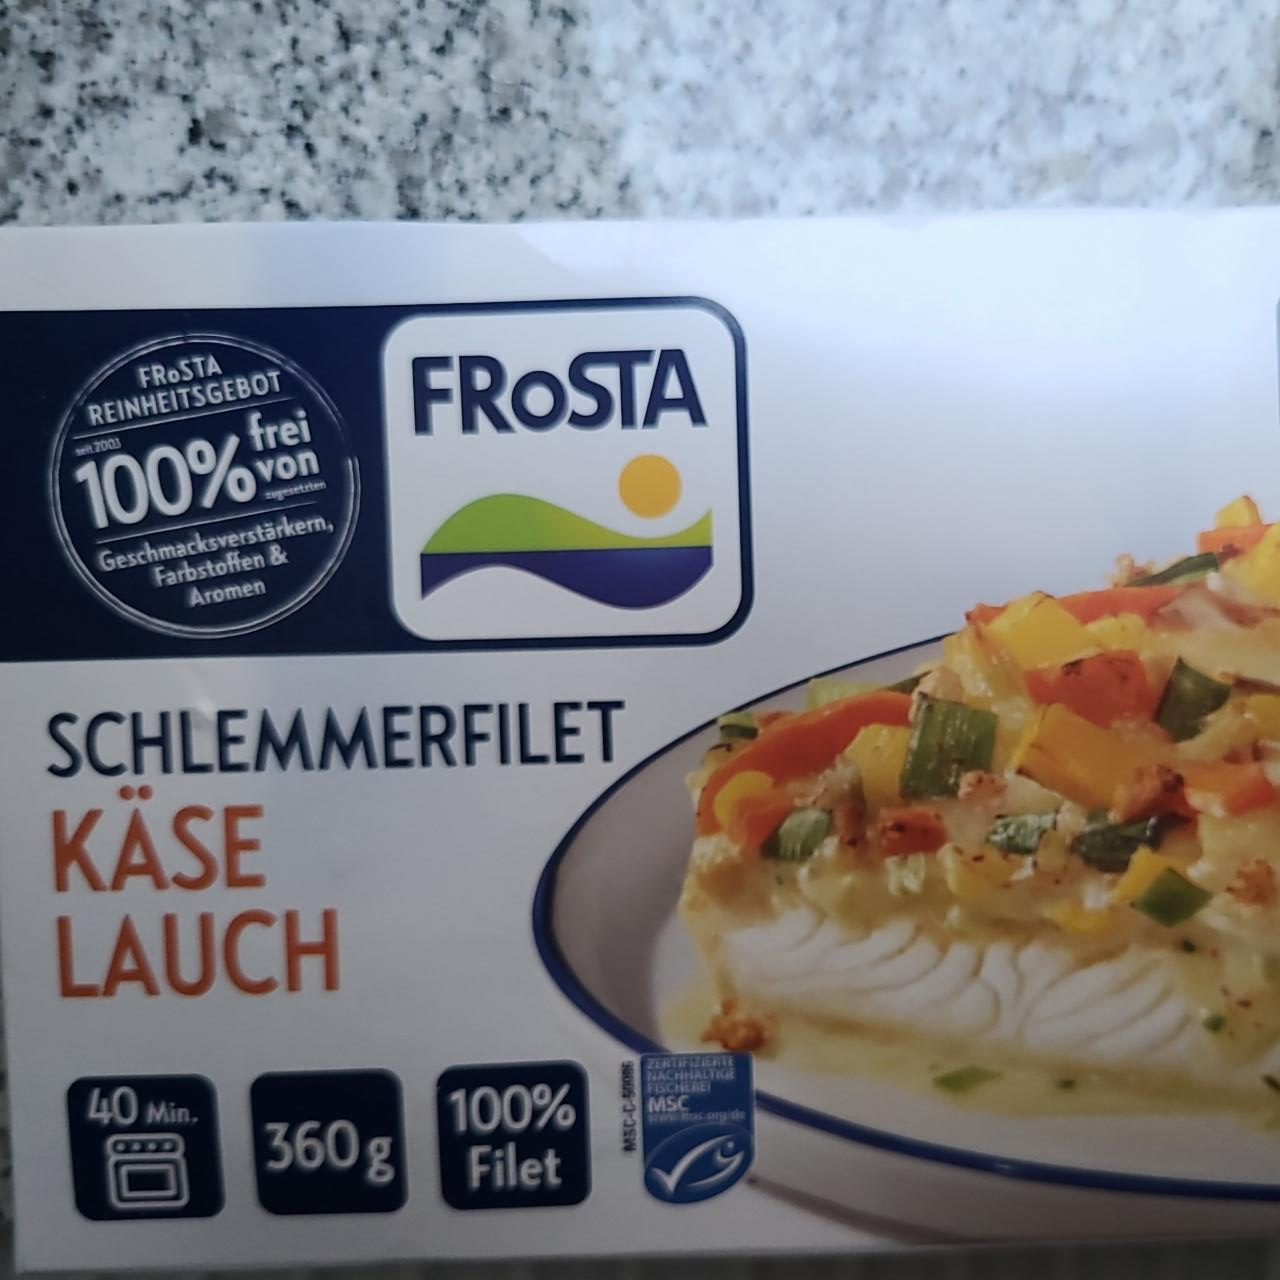 Фото - Филе рыбы под овощами Schlemmerfilet käse lauch FRoSTA